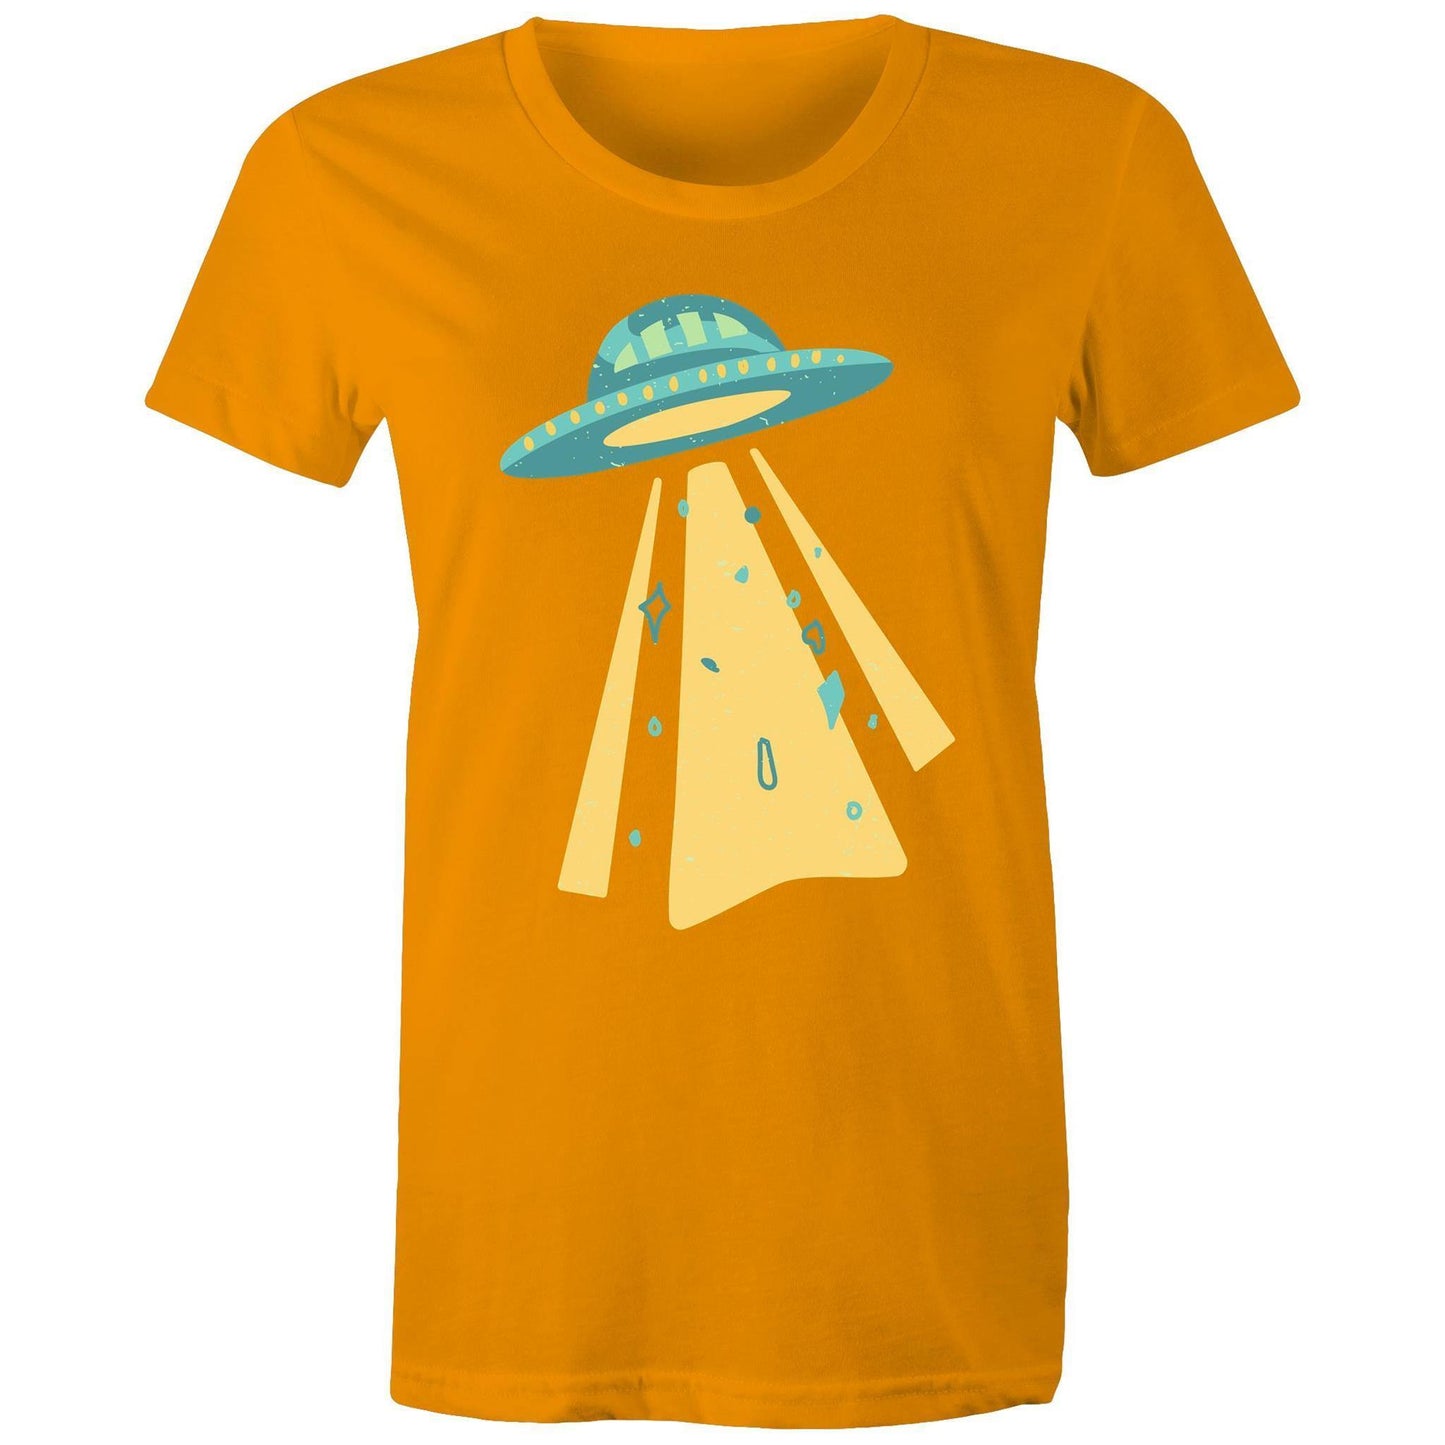 UFO - Women's Maple Tee Orange Womens T-shirt Retro Sci Fi Space Womens